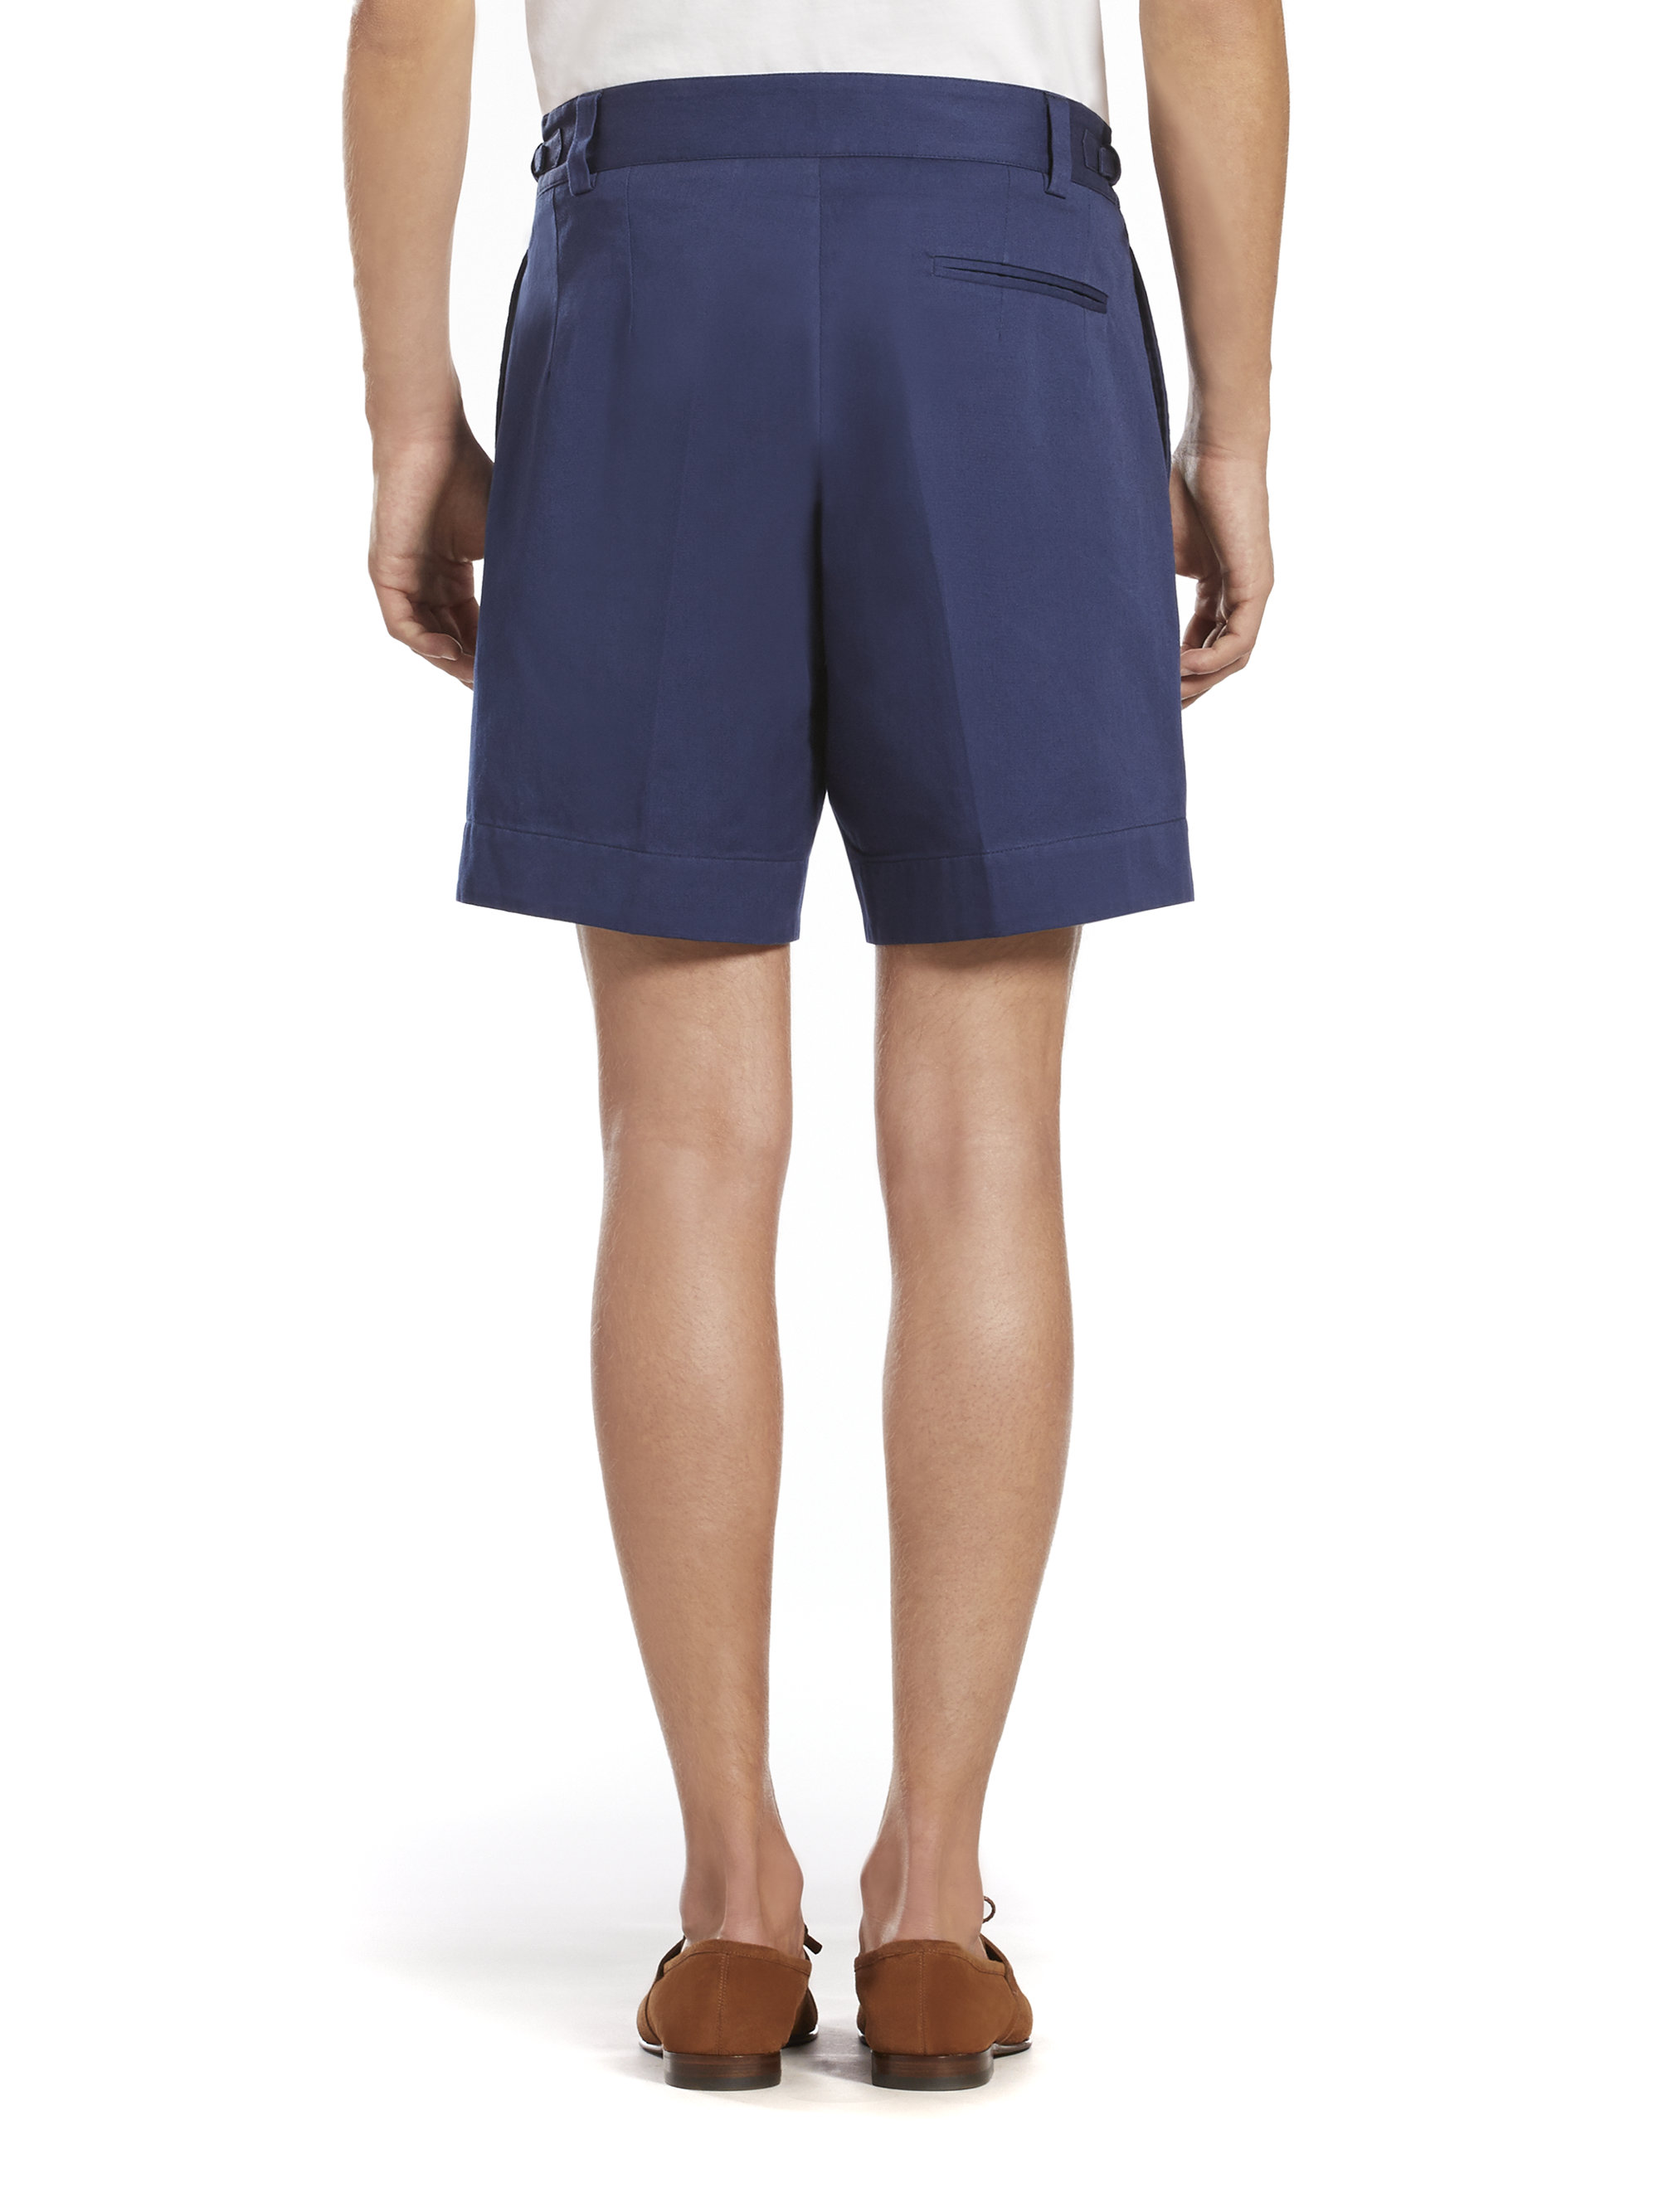 Lyst - Gucci Light Cotton Drill Bermuda Shorts in Blue for Men